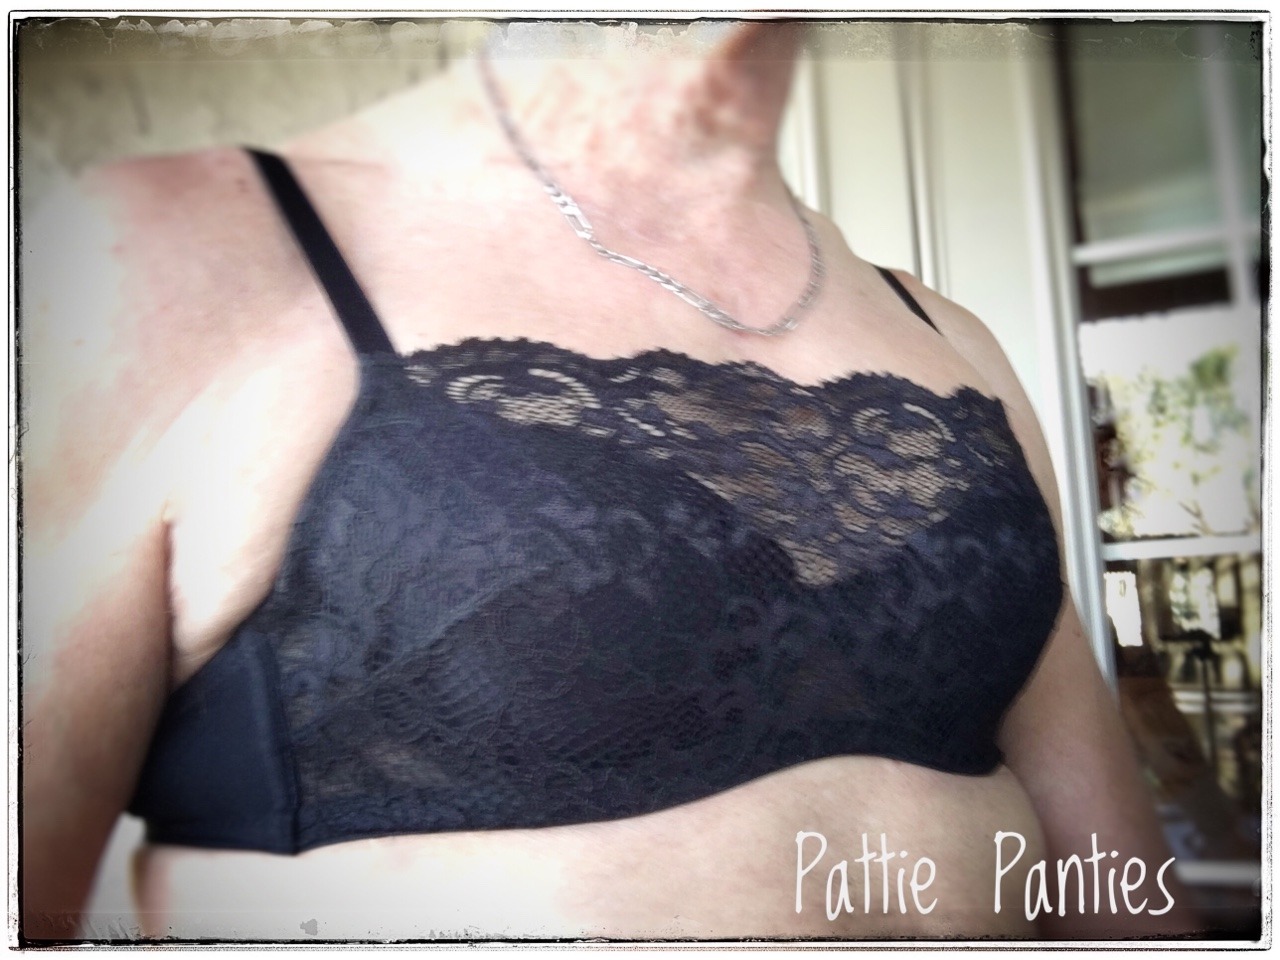 pattiespics: Soma bra for Saturday You can peek at more of Pattie’s Panties, Bras